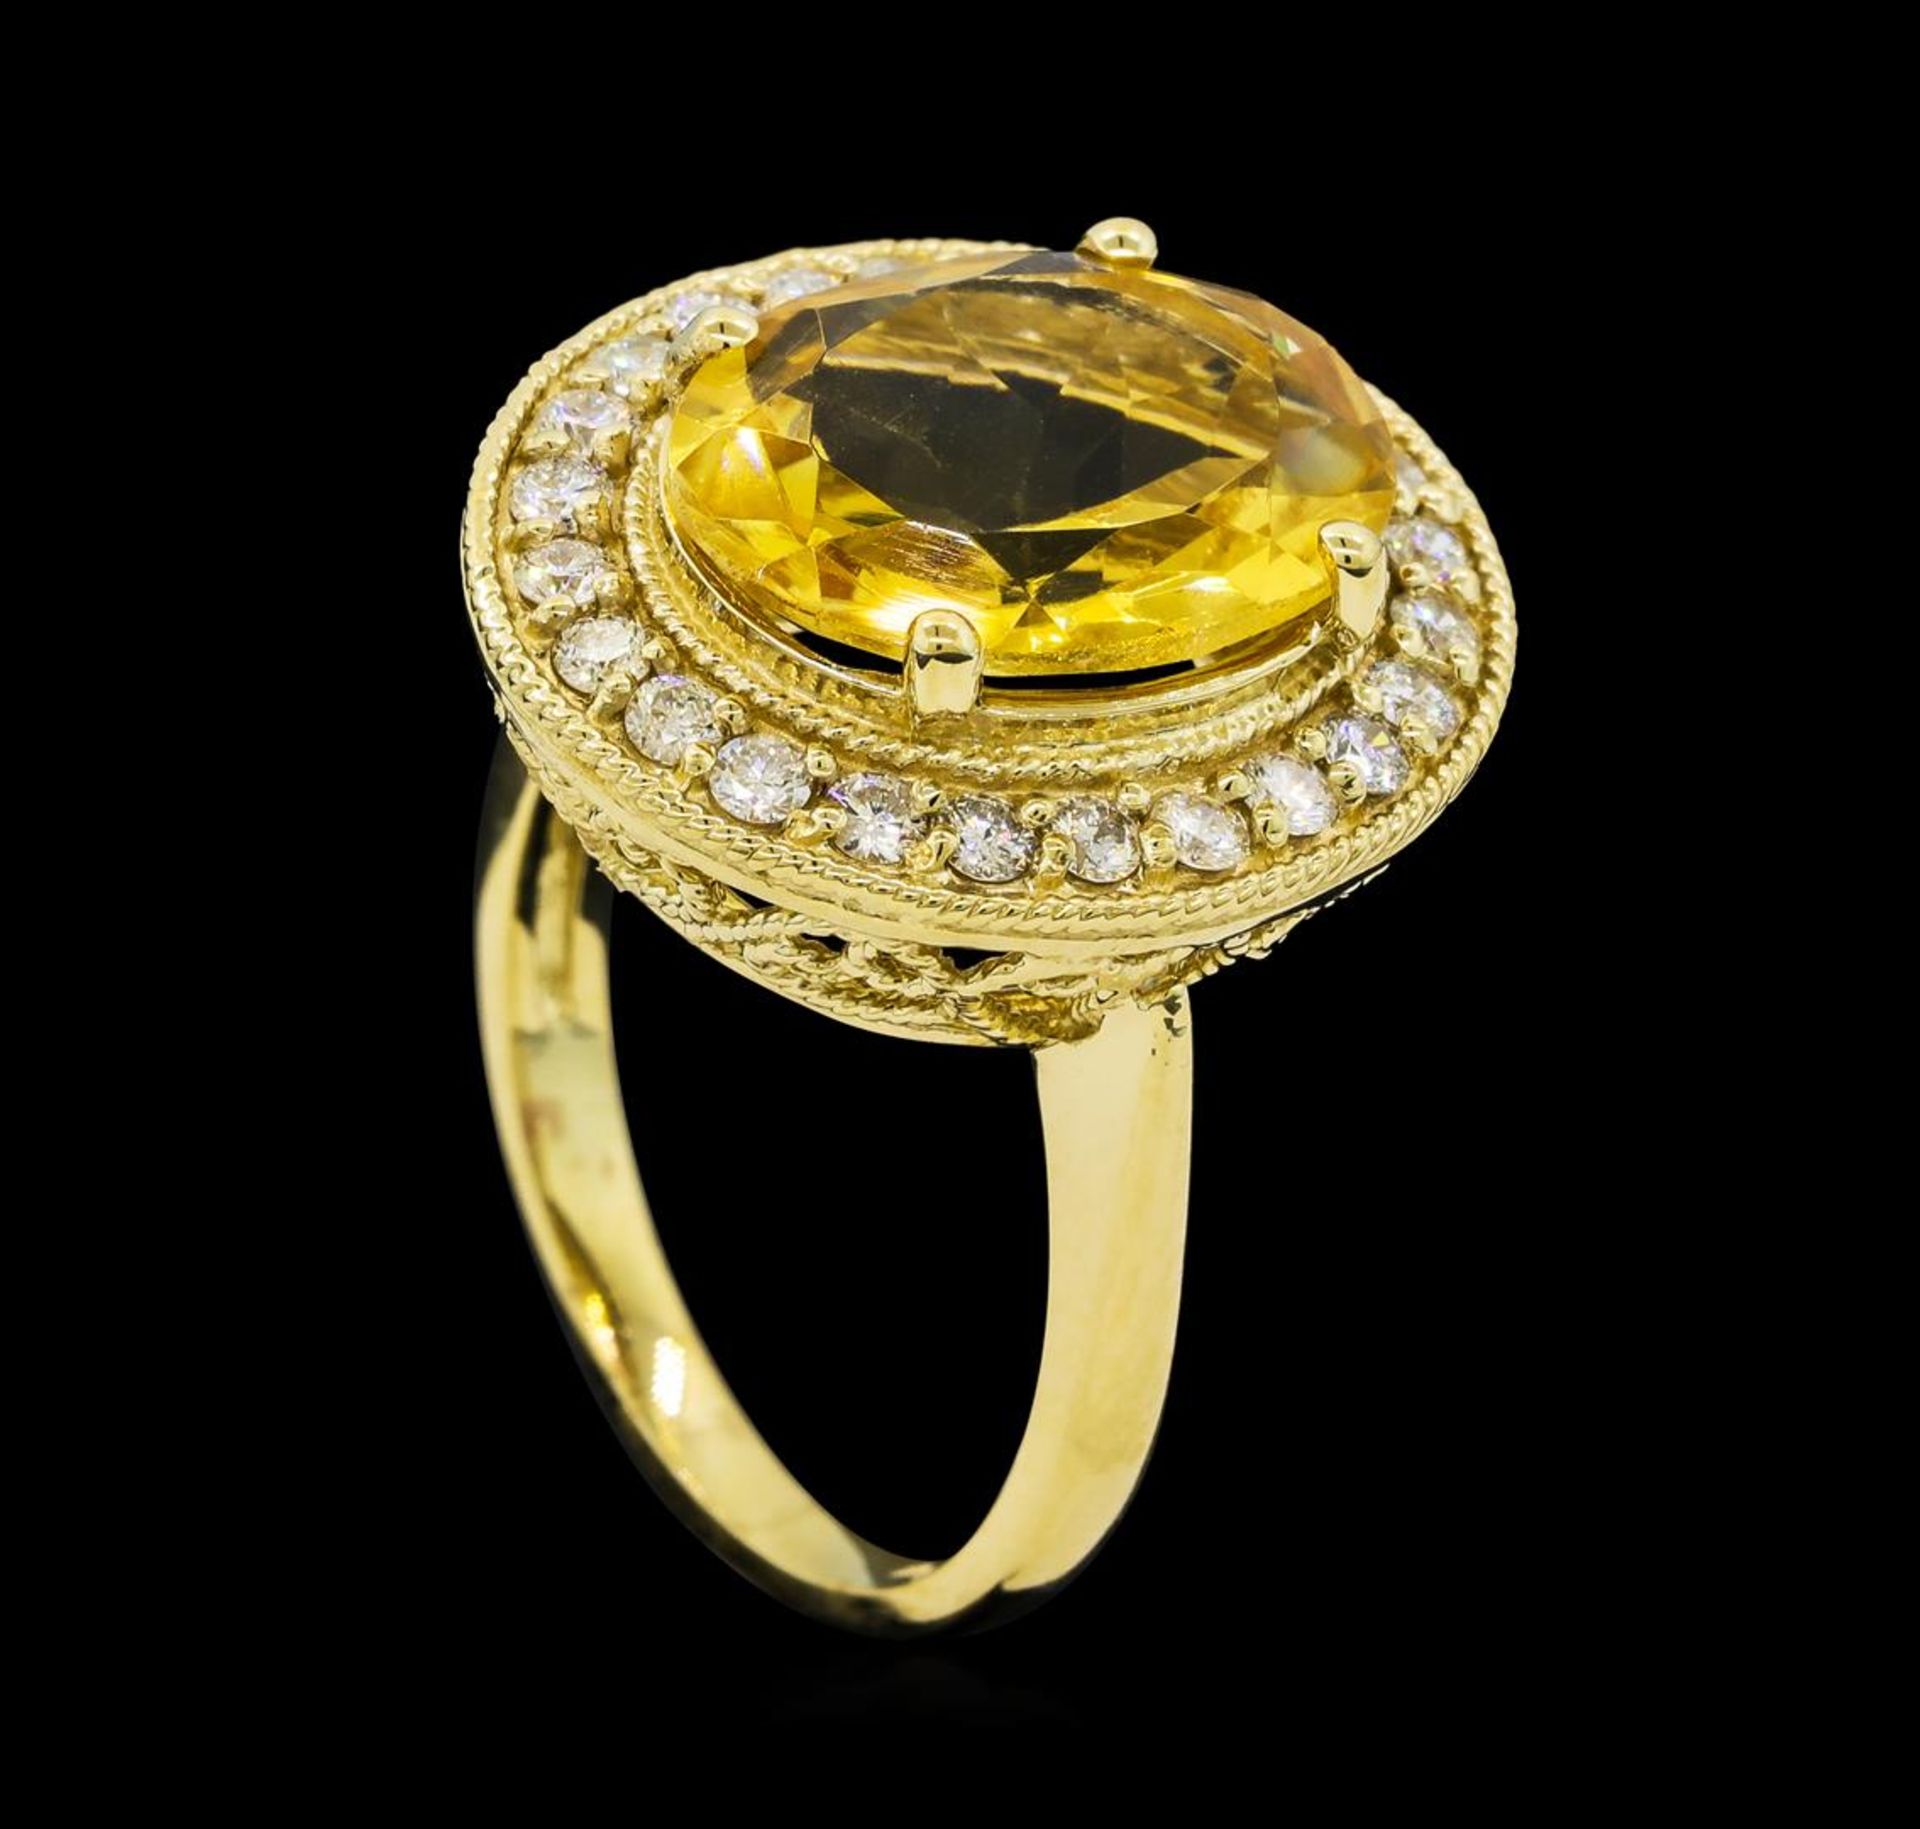 4.22 ctw Citrine Quartz and Diamond Ring - 14KT Yellow Gold - Image 4 of 4